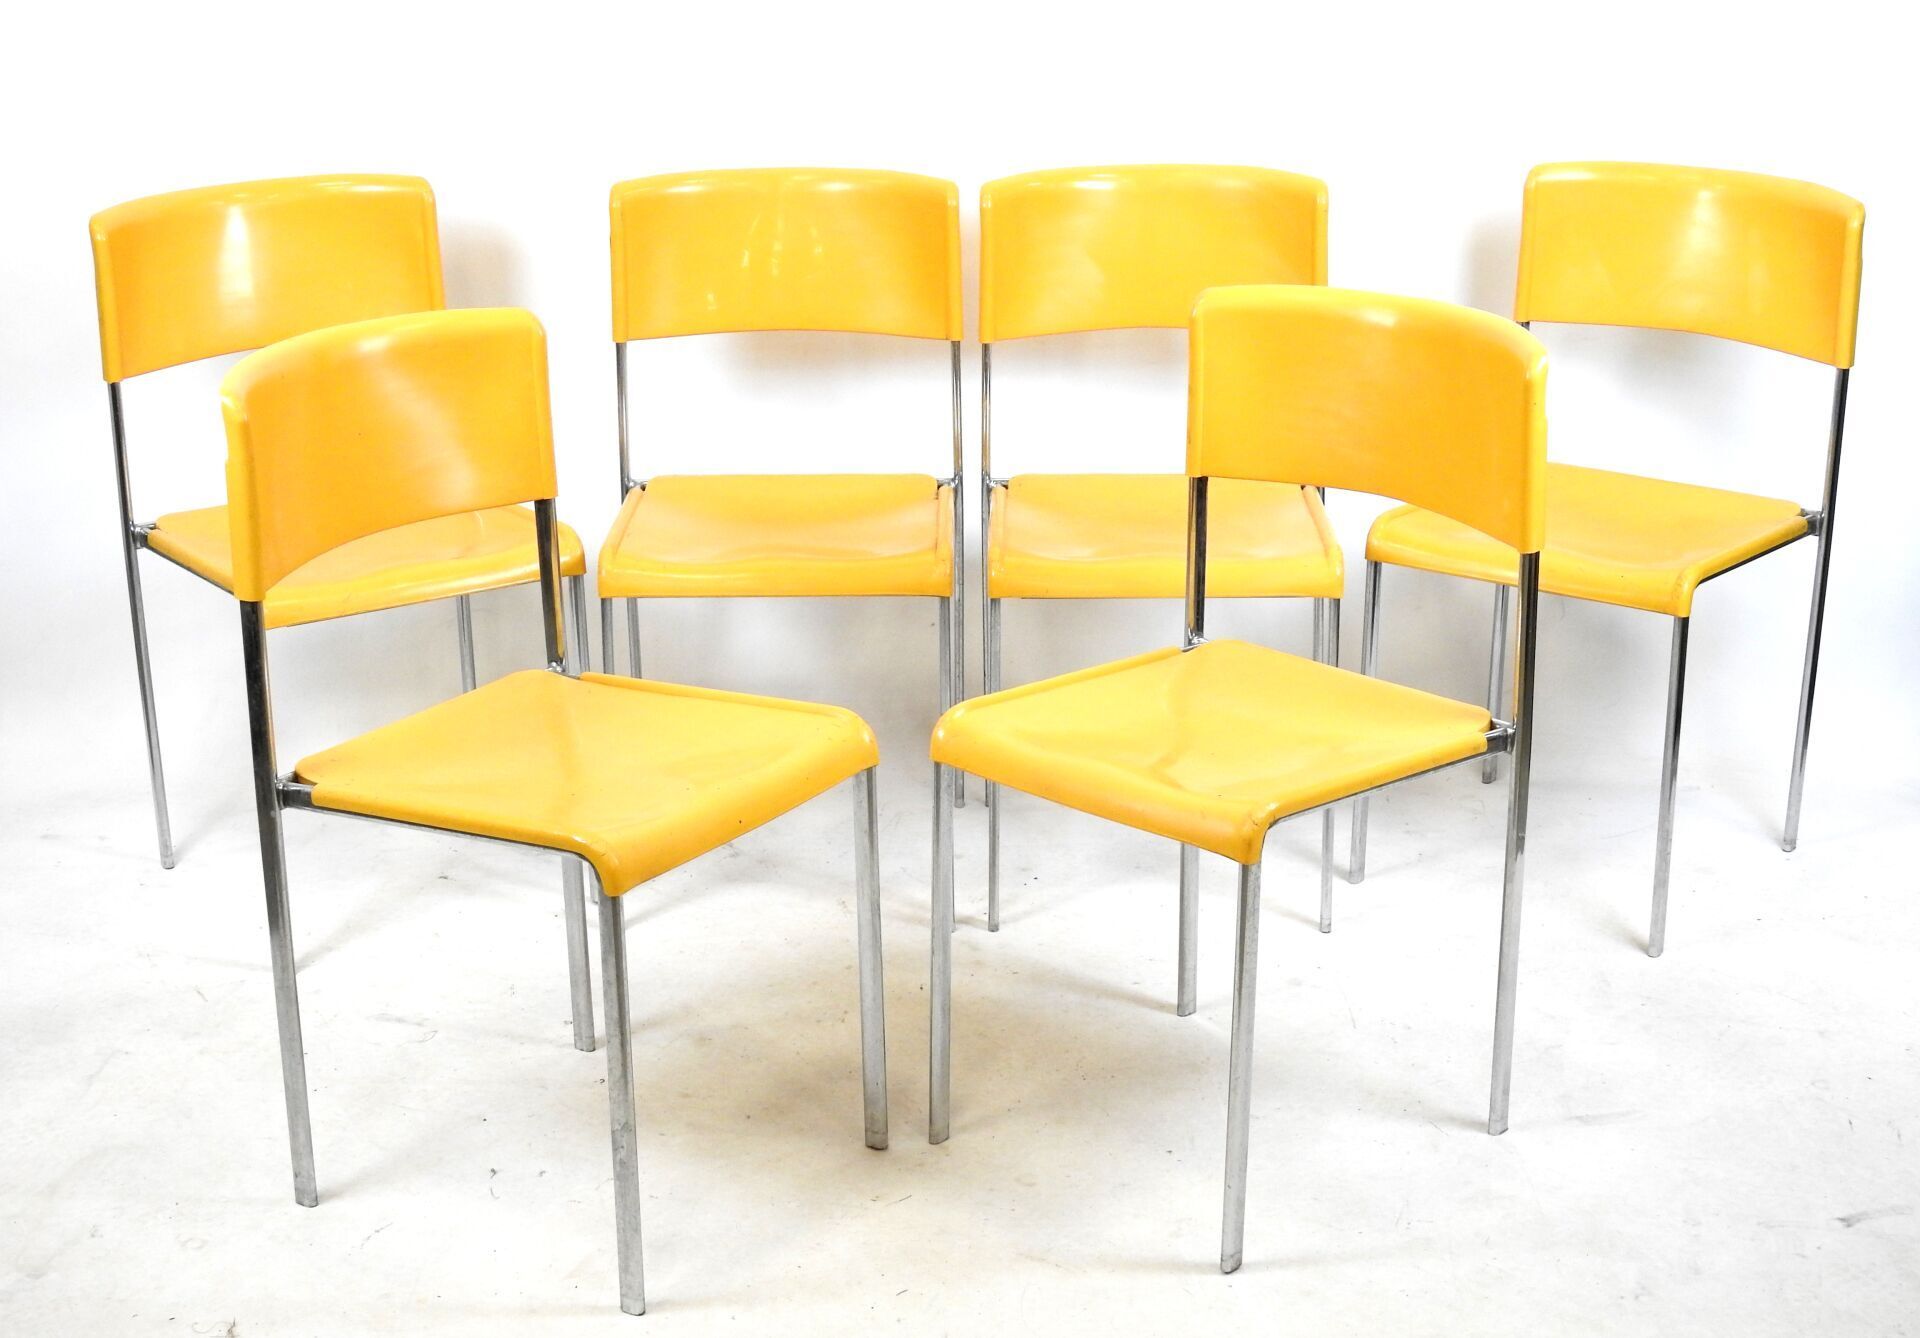 Null GRAPHAL for LAFARGE：六把镀铬金属和黄色塑料堆叠椅套件，型号 L303。 座椅下有签名。高度 79 厘米。磨损，靠背一端撕裂。